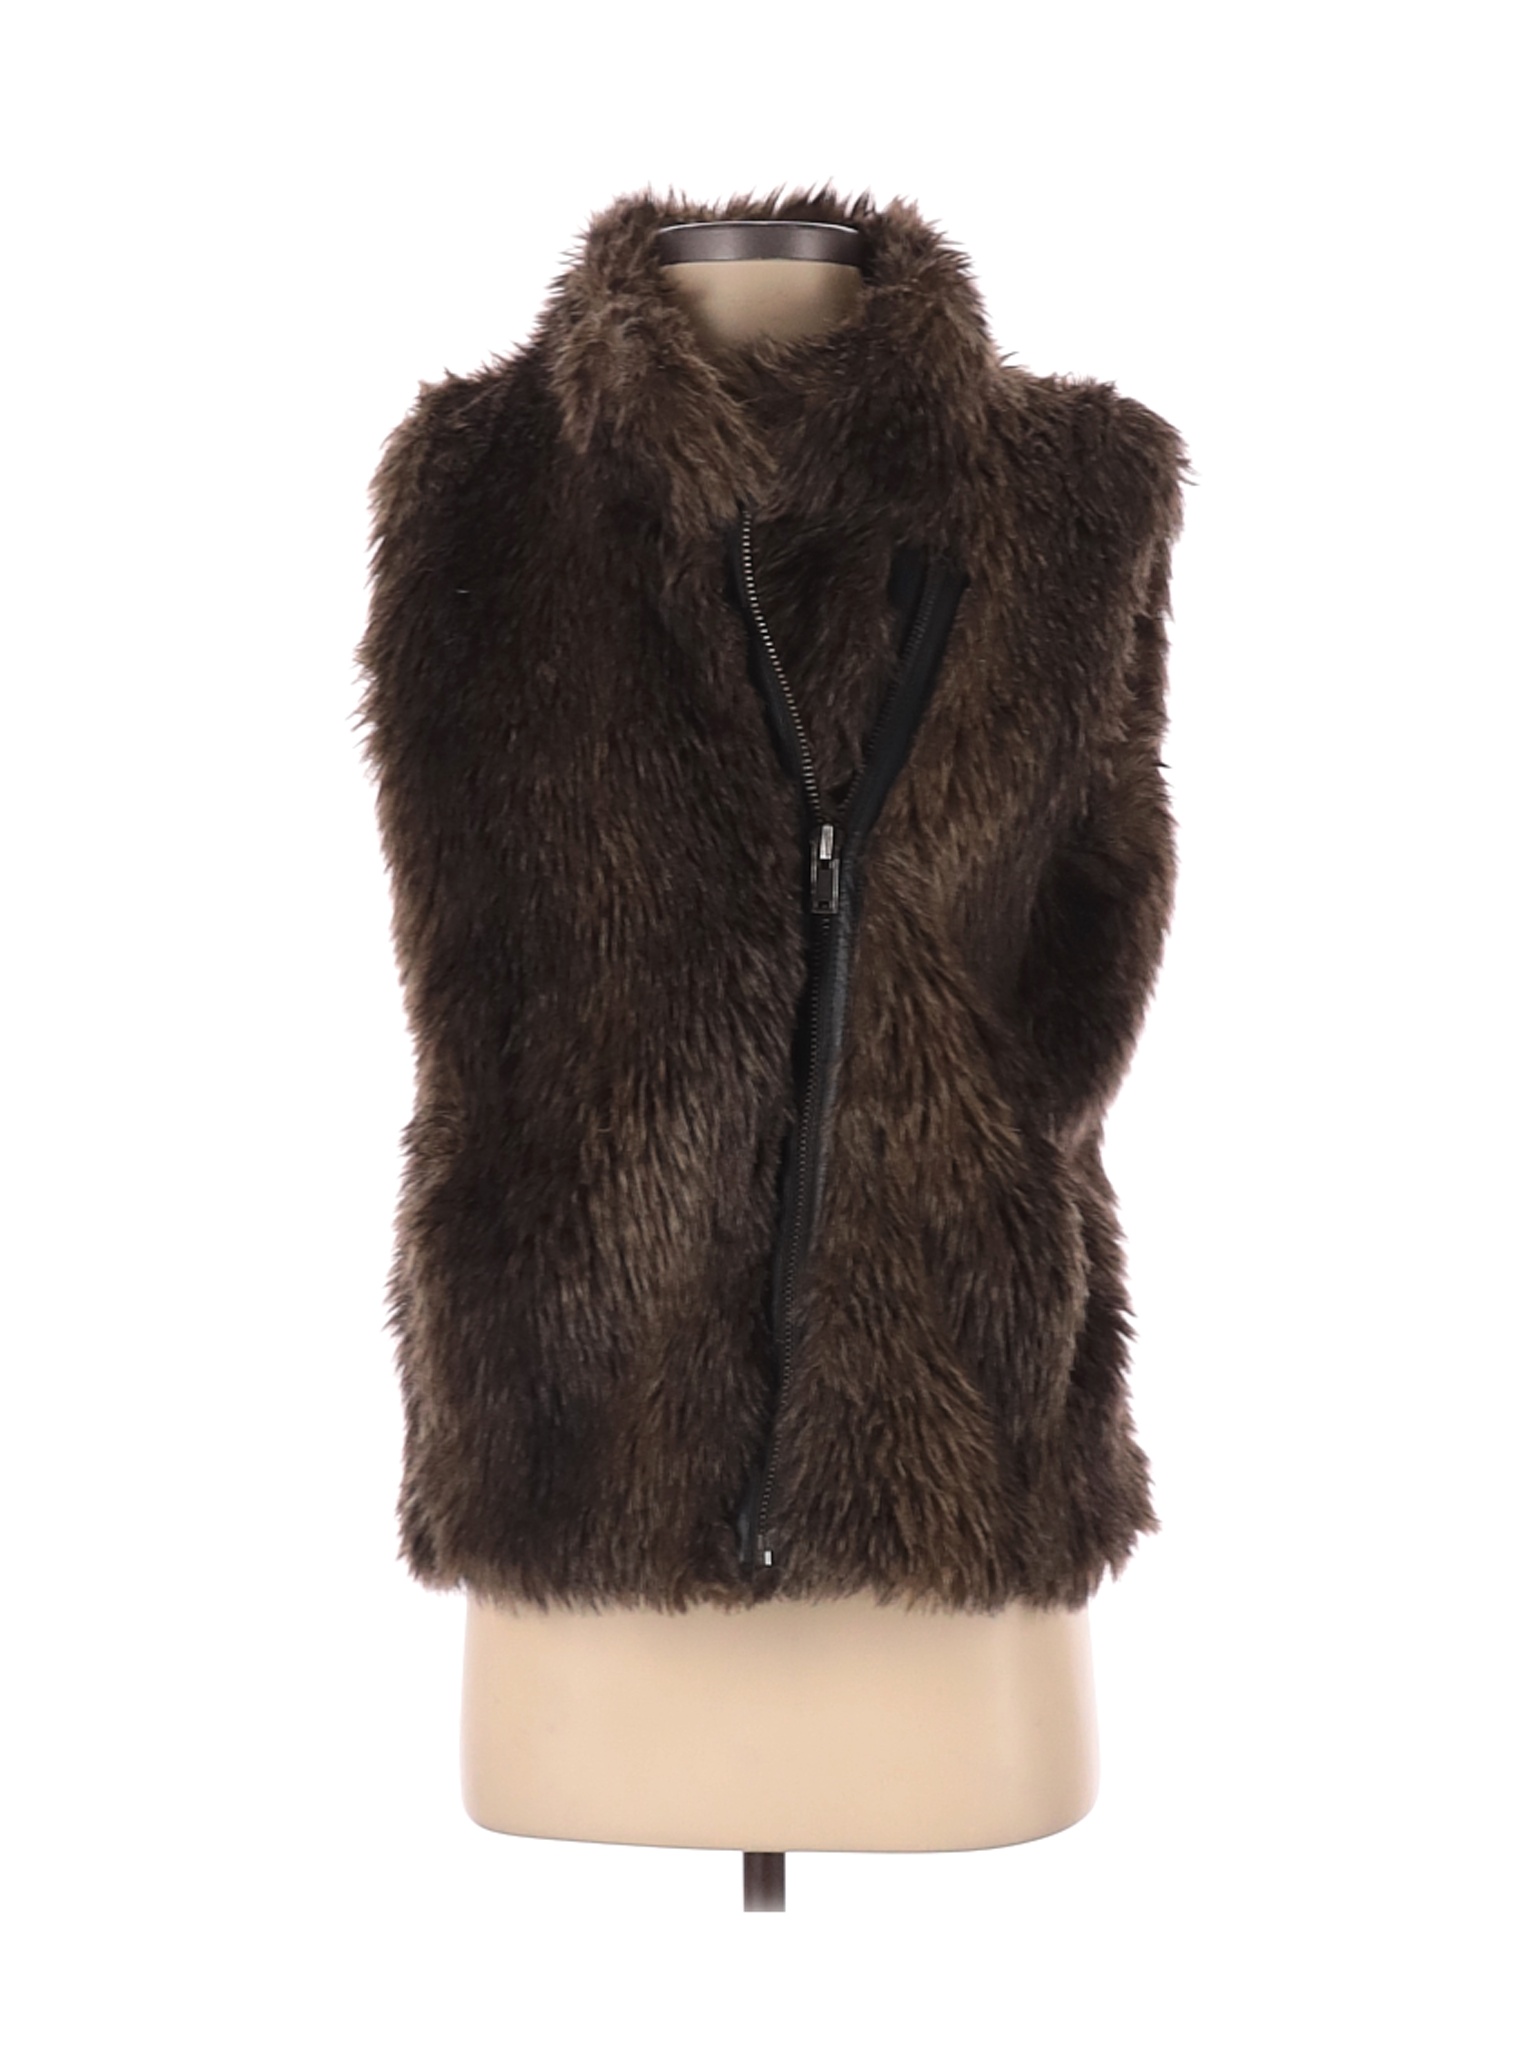 Banana Republic Women Brown Faux Fur Vest S | eBay